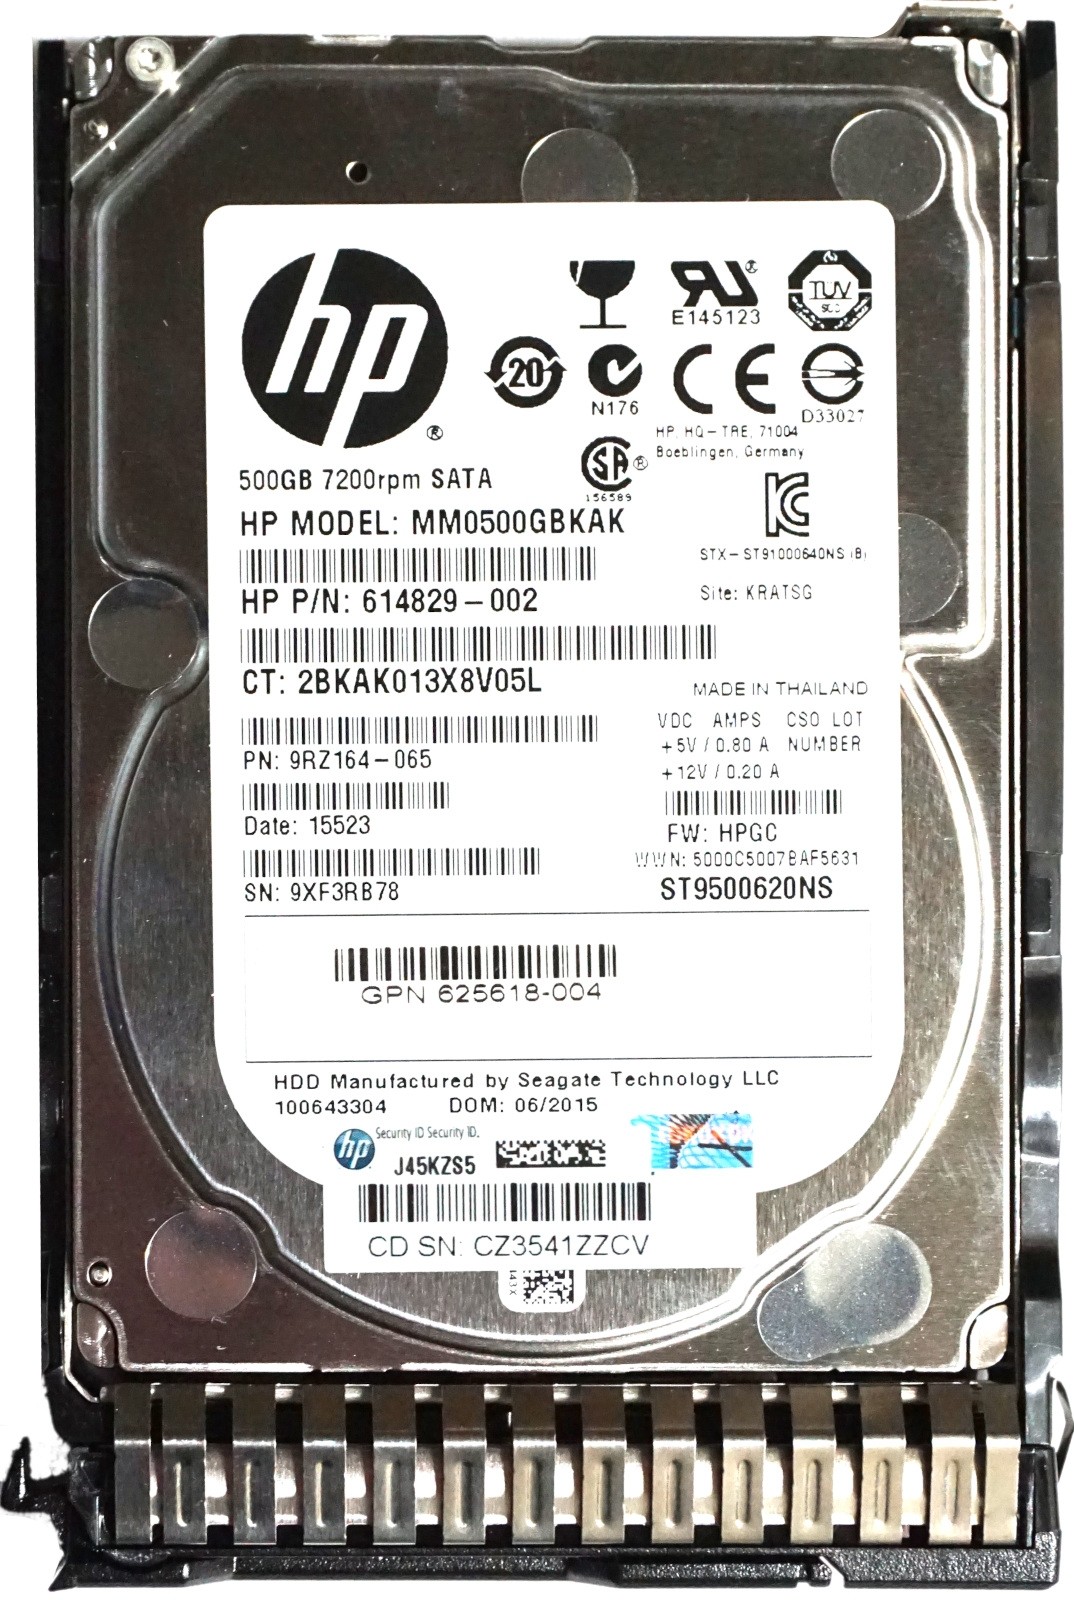 HP (614829-002) 500GB SATA (2.5") 6Gbps 7.2K HDD in Gen8 Hot-Swap Caddy